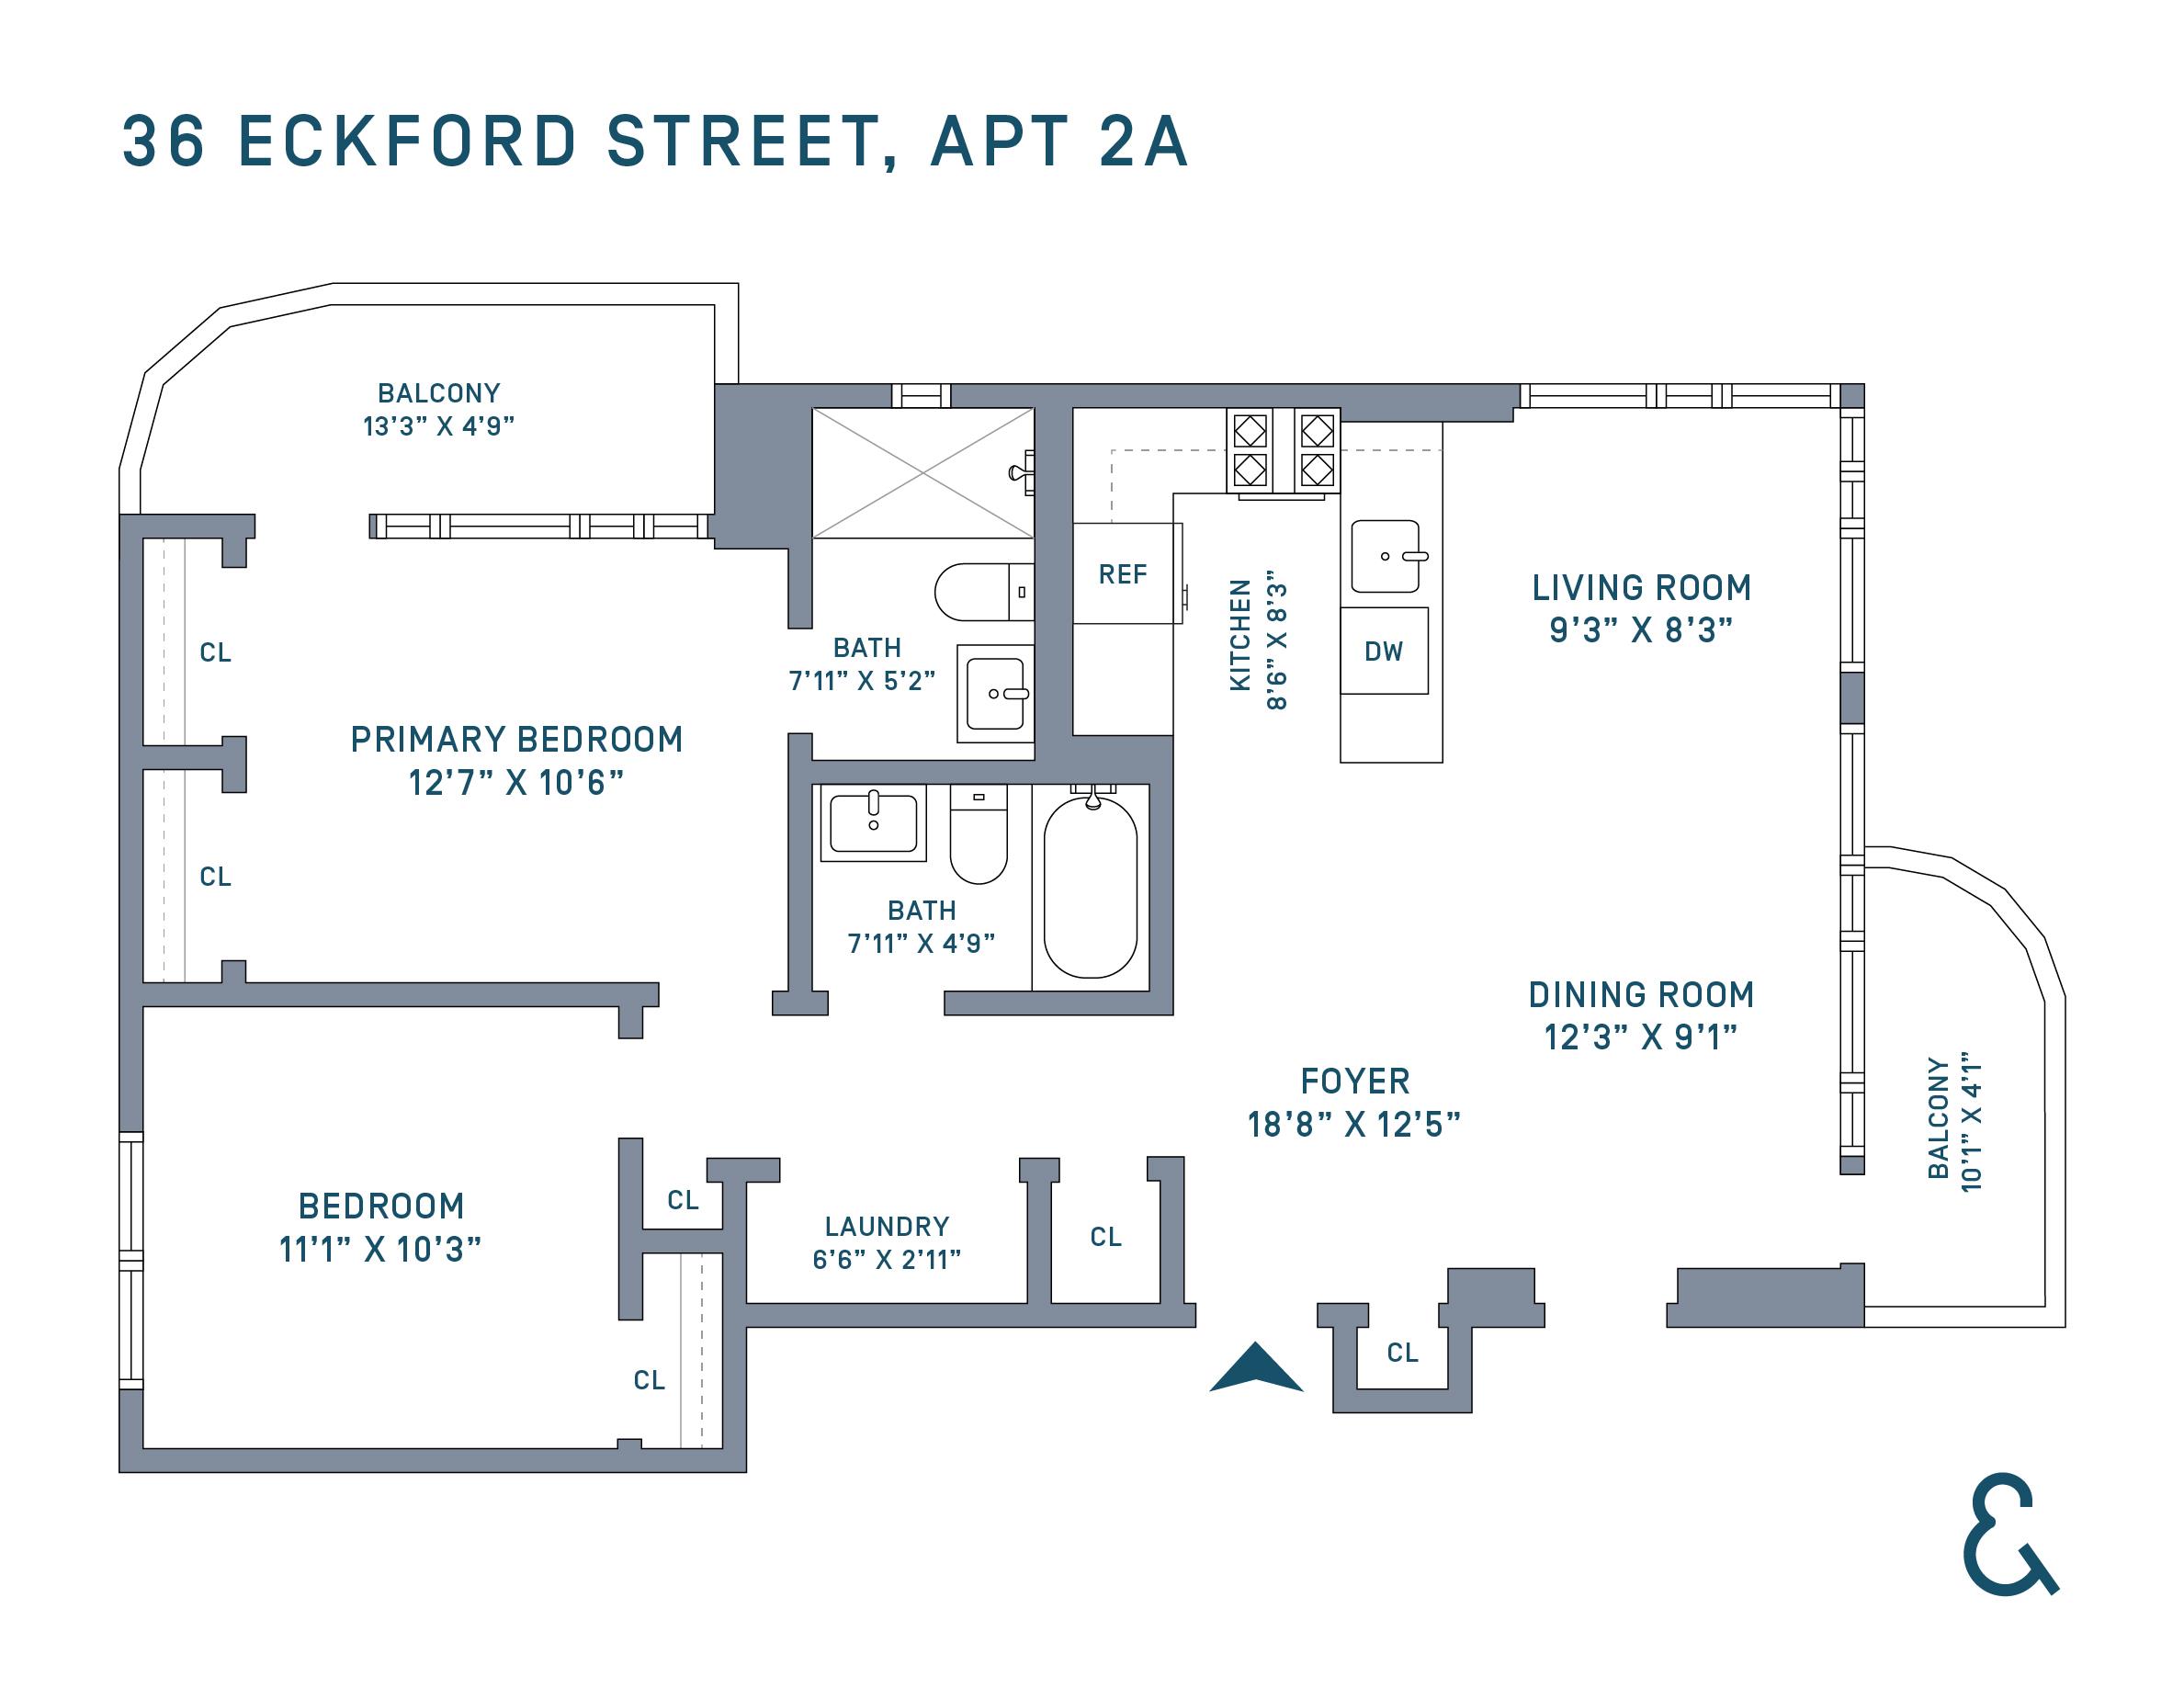 Floorplan for 36 Eckford Street, 2-A